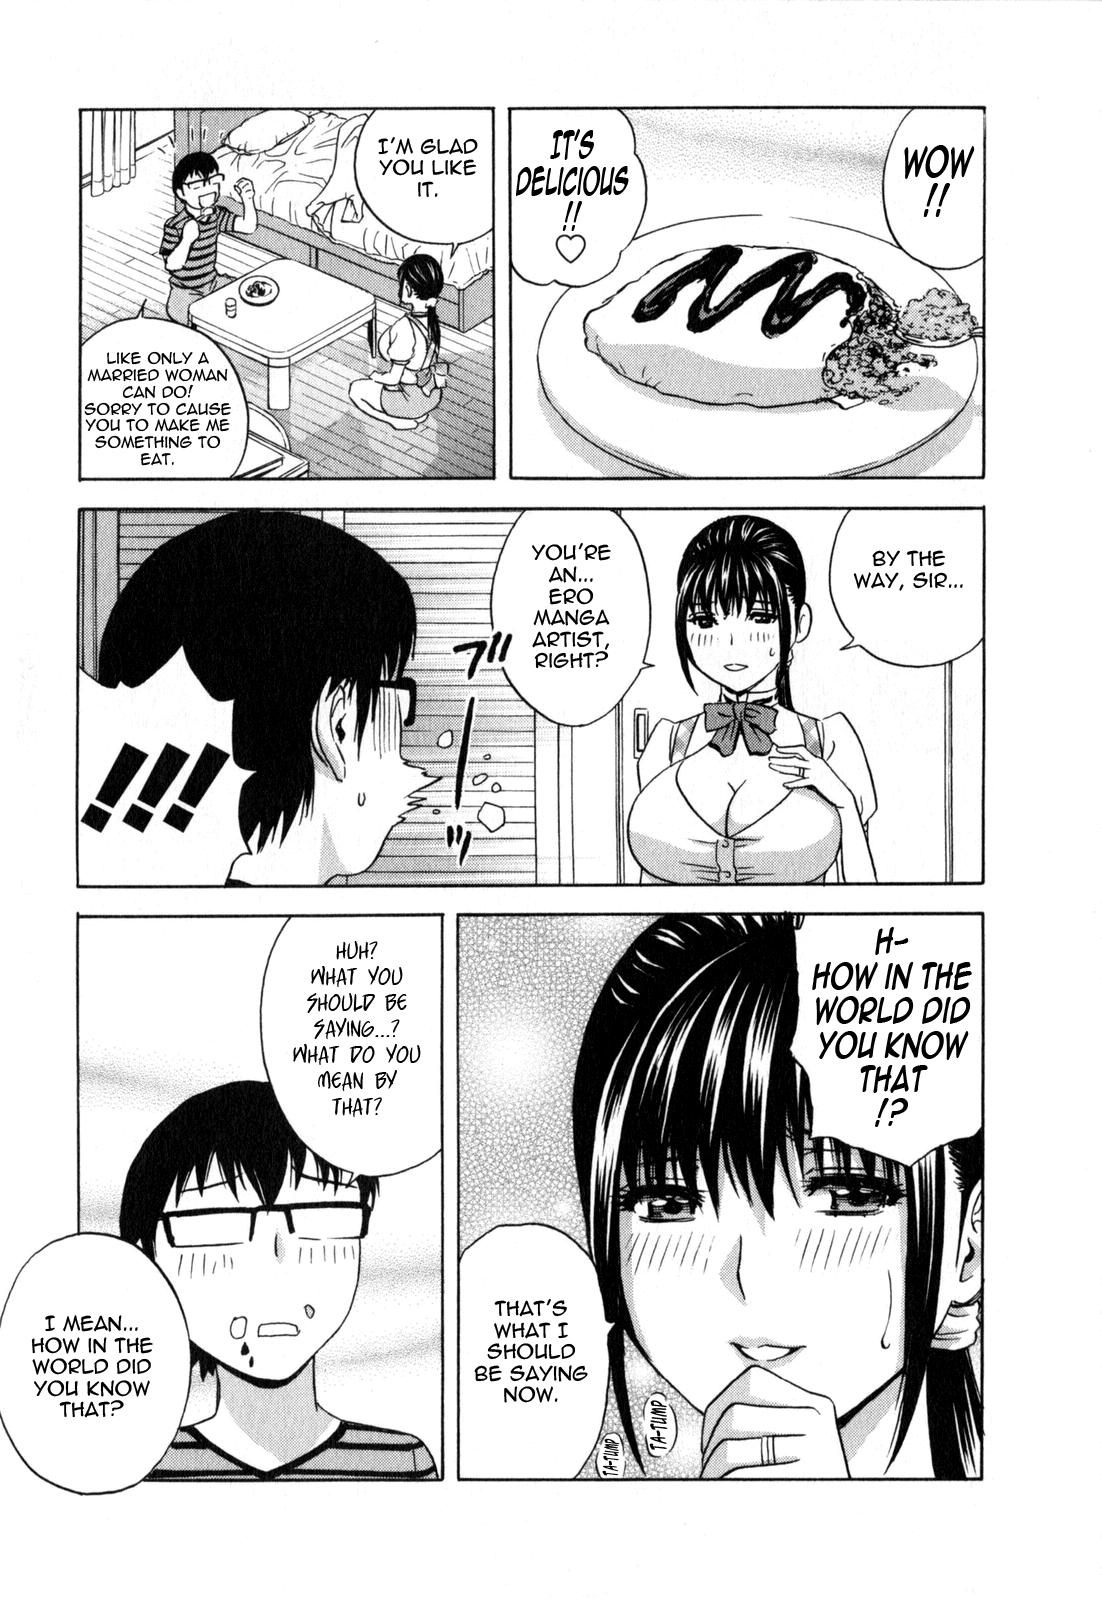 [Hidemaru] Life with Married Women Just Like a Manga 2 - Ch. 1-7 [English] {Tadanohito} 113